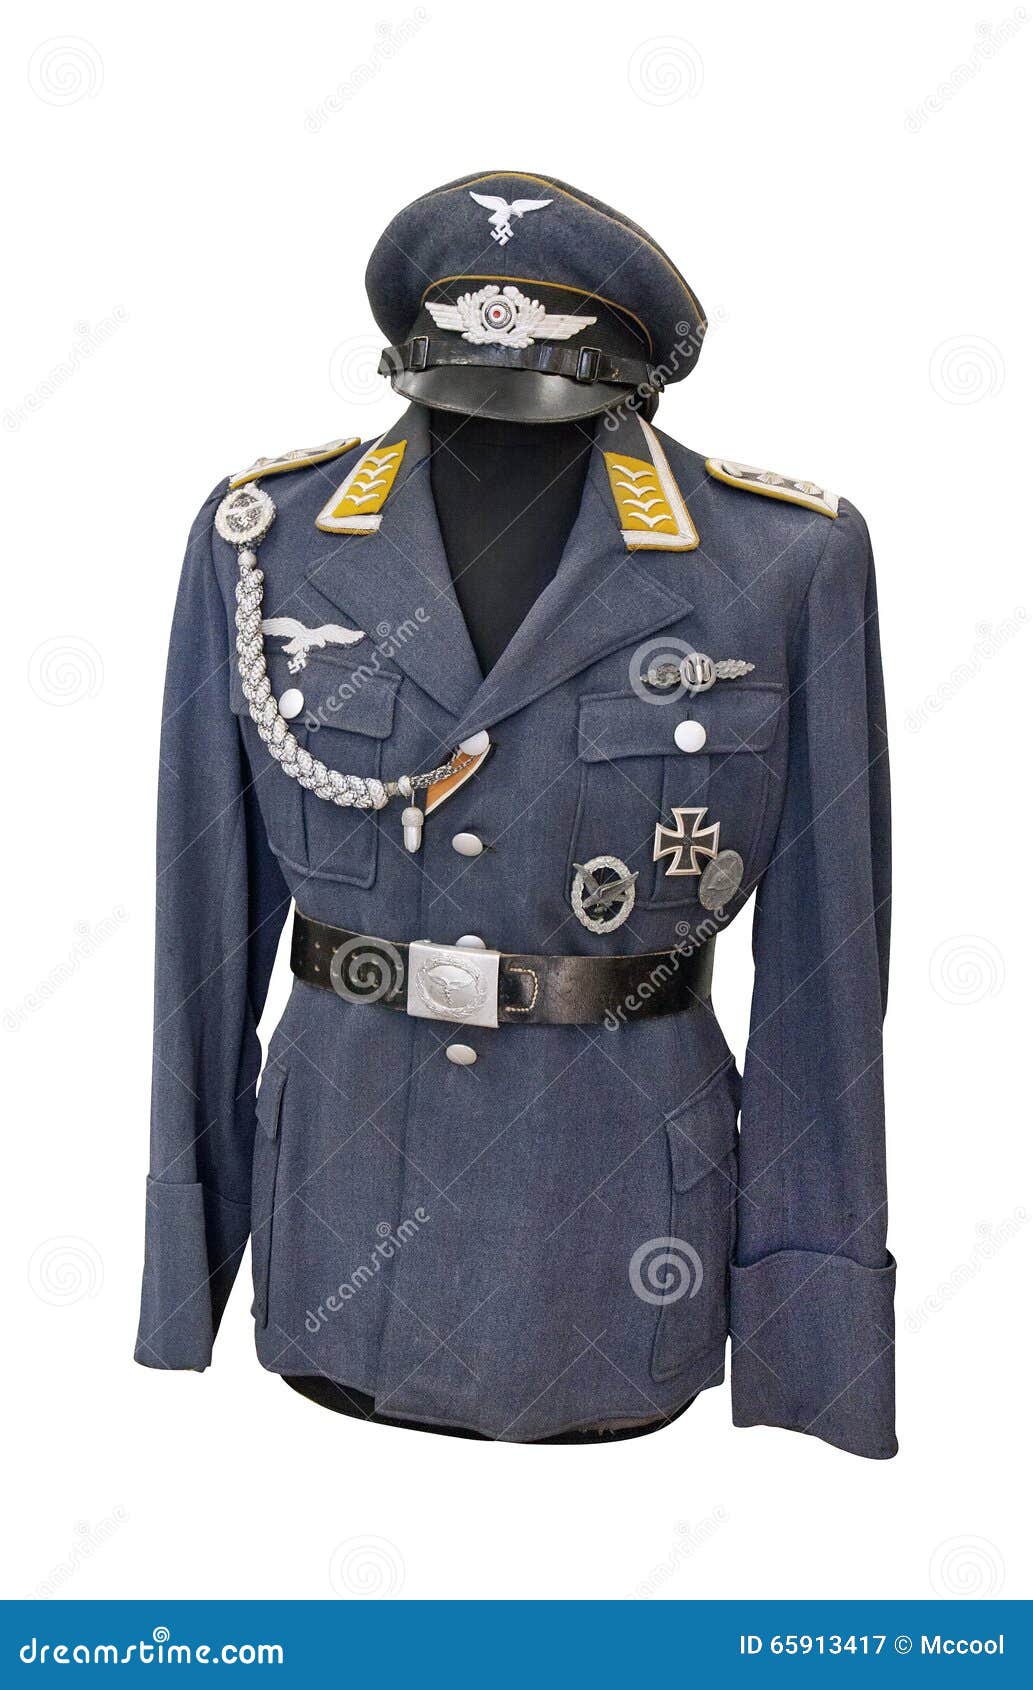 Uniform of Staff Sergeant of German Air Force ( Luftwaffe) Stock Image